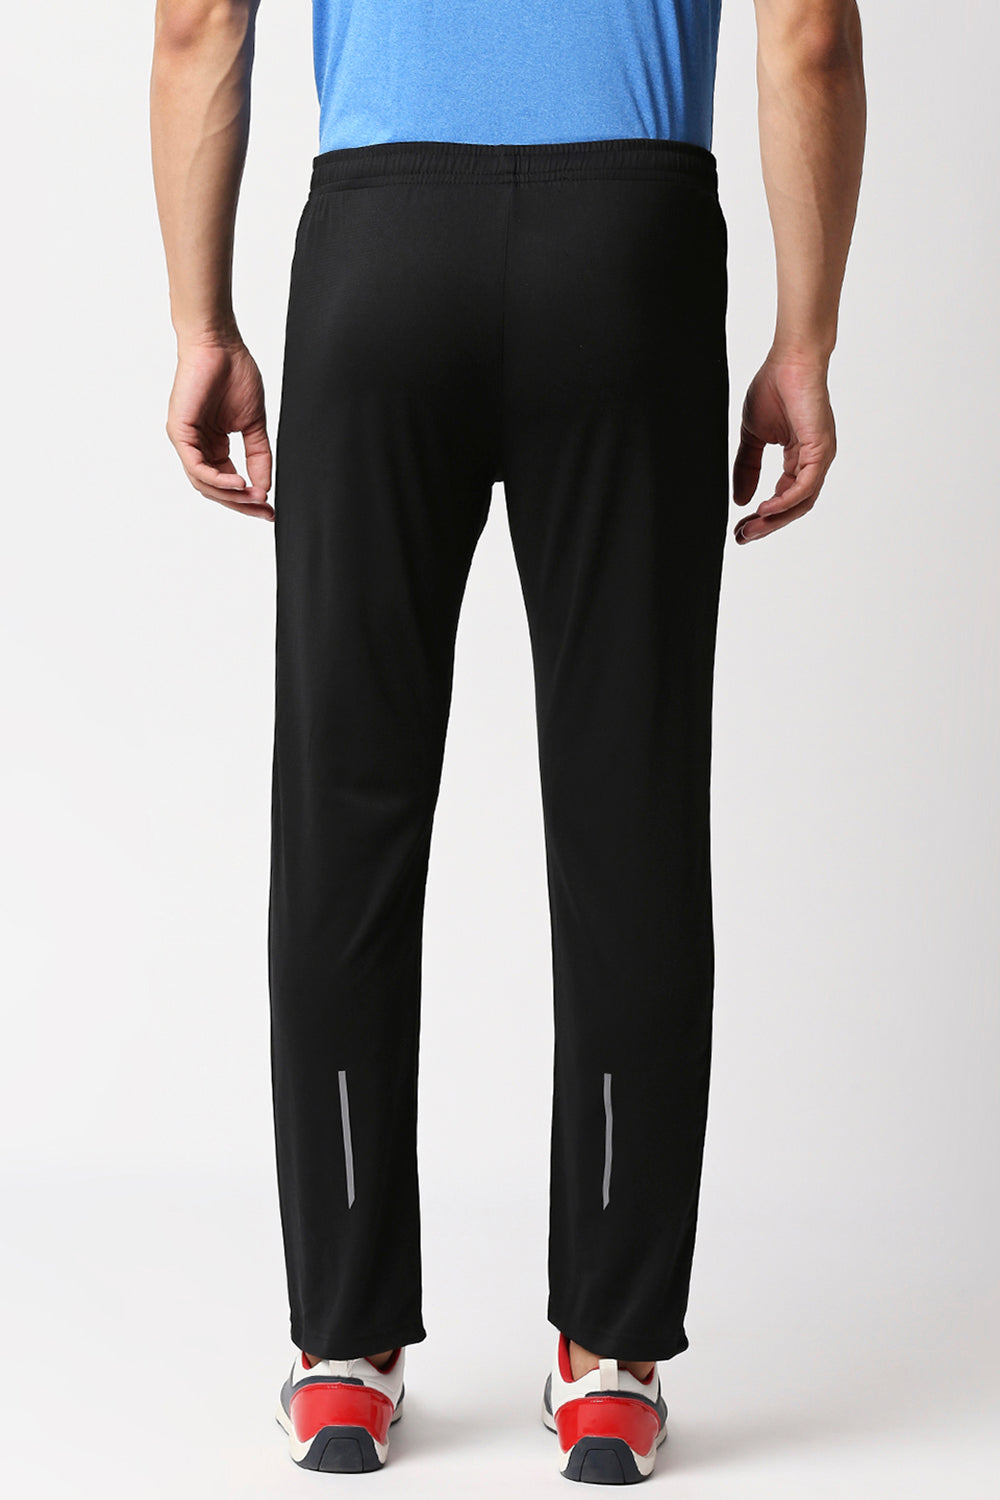 Buy Clovia Comfort-Fit Active Track Pants - Blue at Rs.779 online |  Activewear online